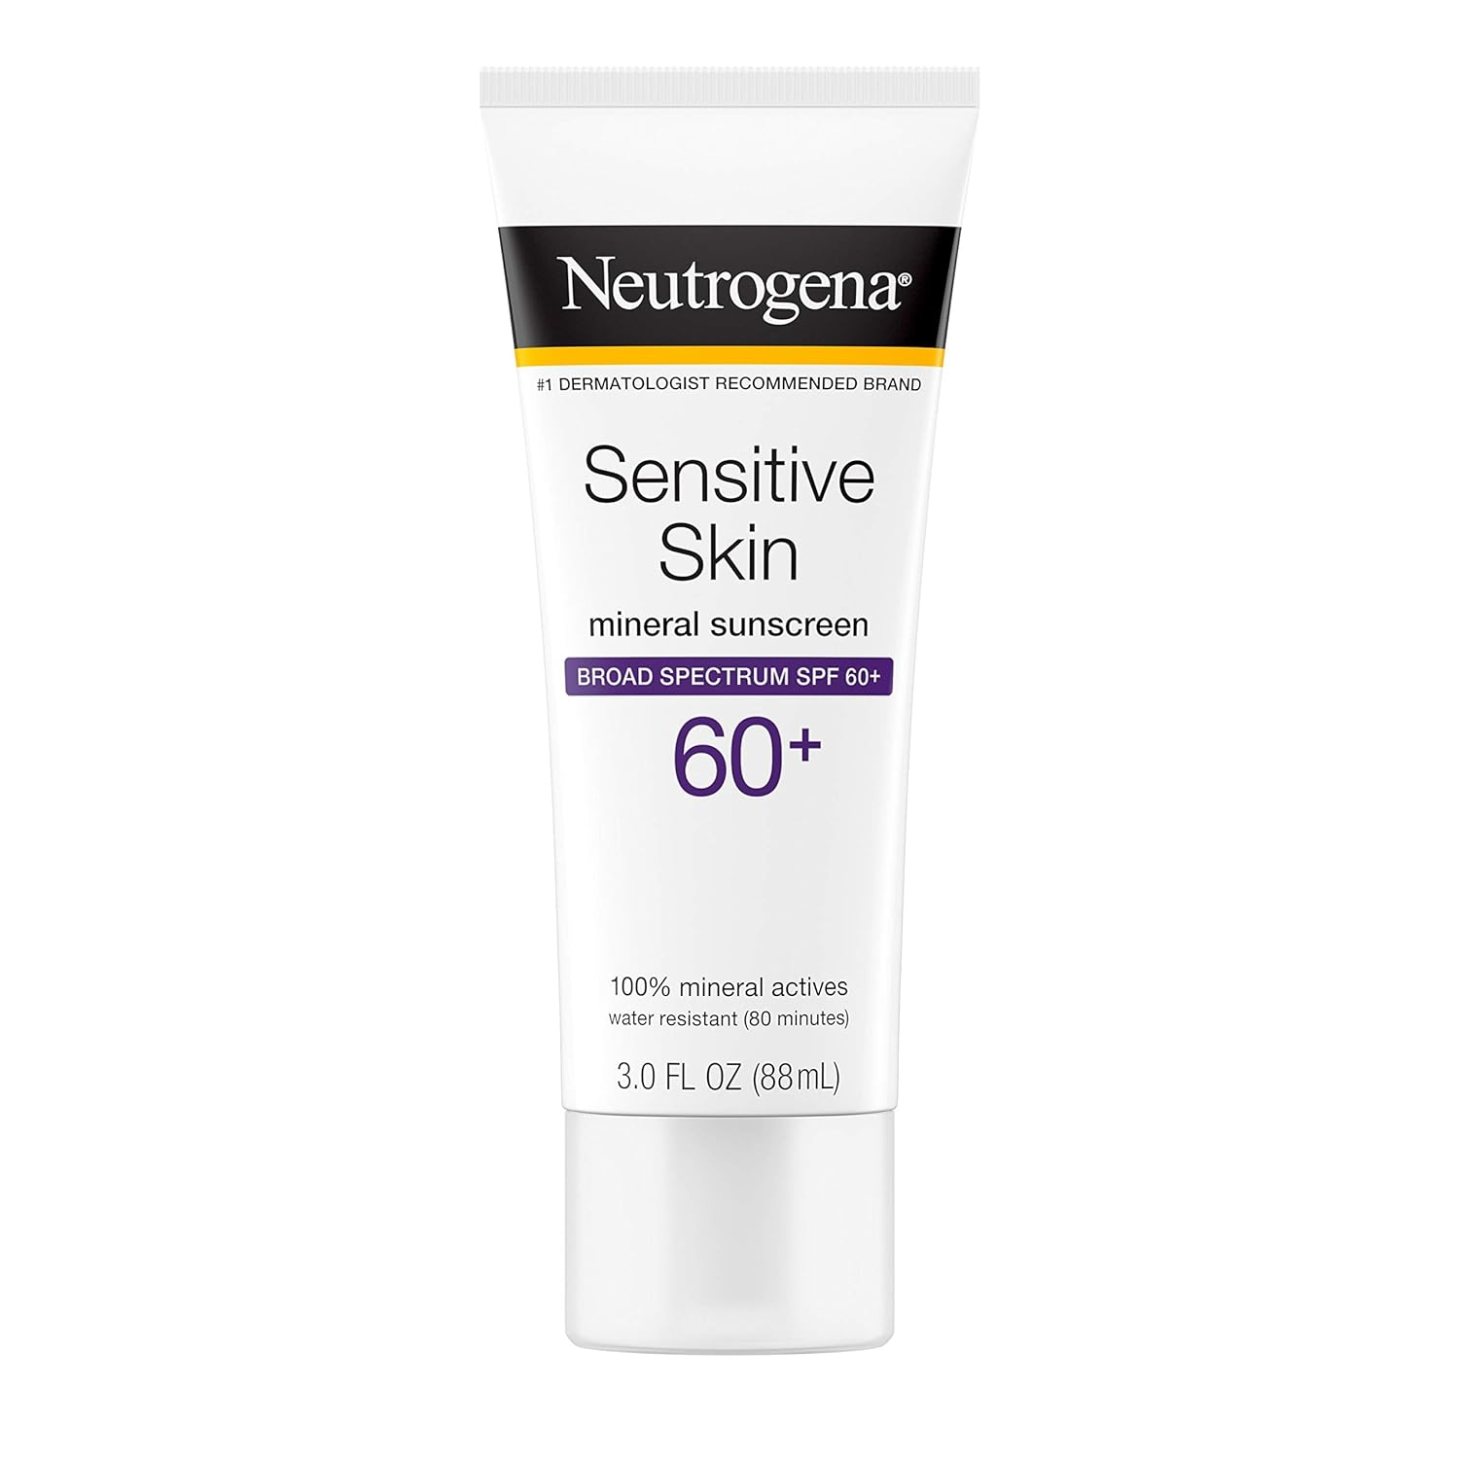 neutrogena sensitive skin mineral sunscreen spf 60, one of the best sunscreens for sensitive skin